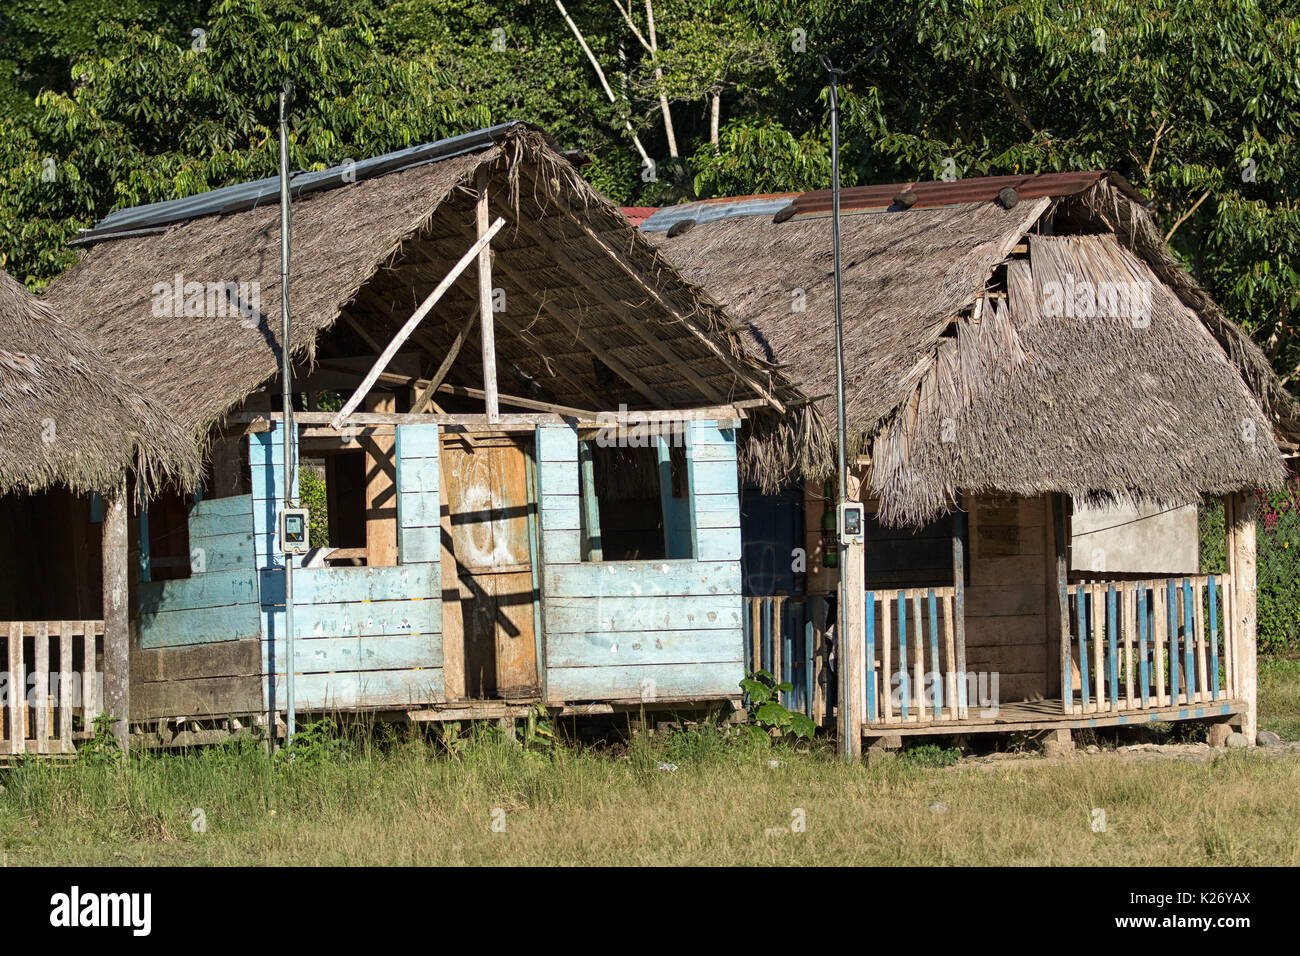 Juni 6, 2017 Misahualli, Ecuador: kleine Wohnung Hütten im Amazonasgebiet Stockfoto